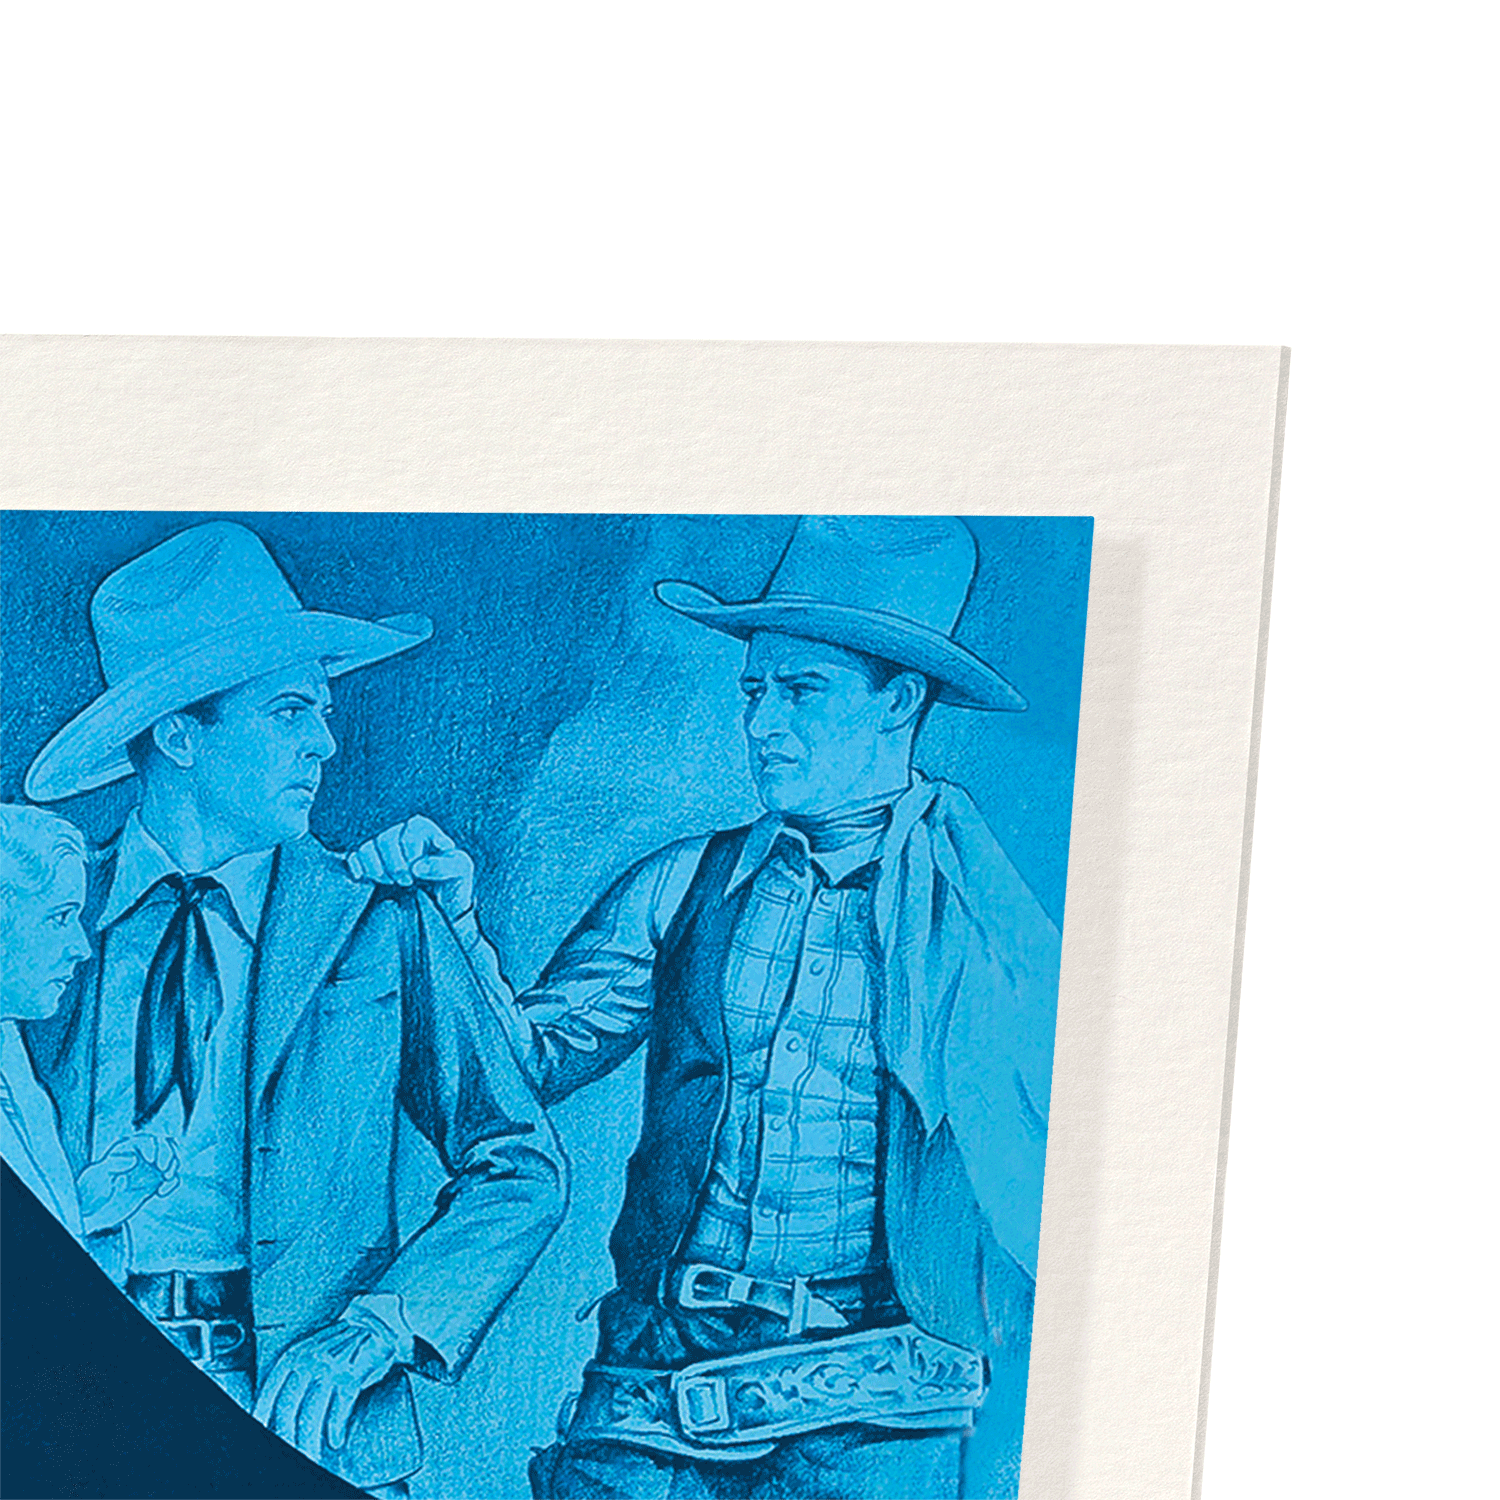 BLUE STEEL (1934): Poster Art Print